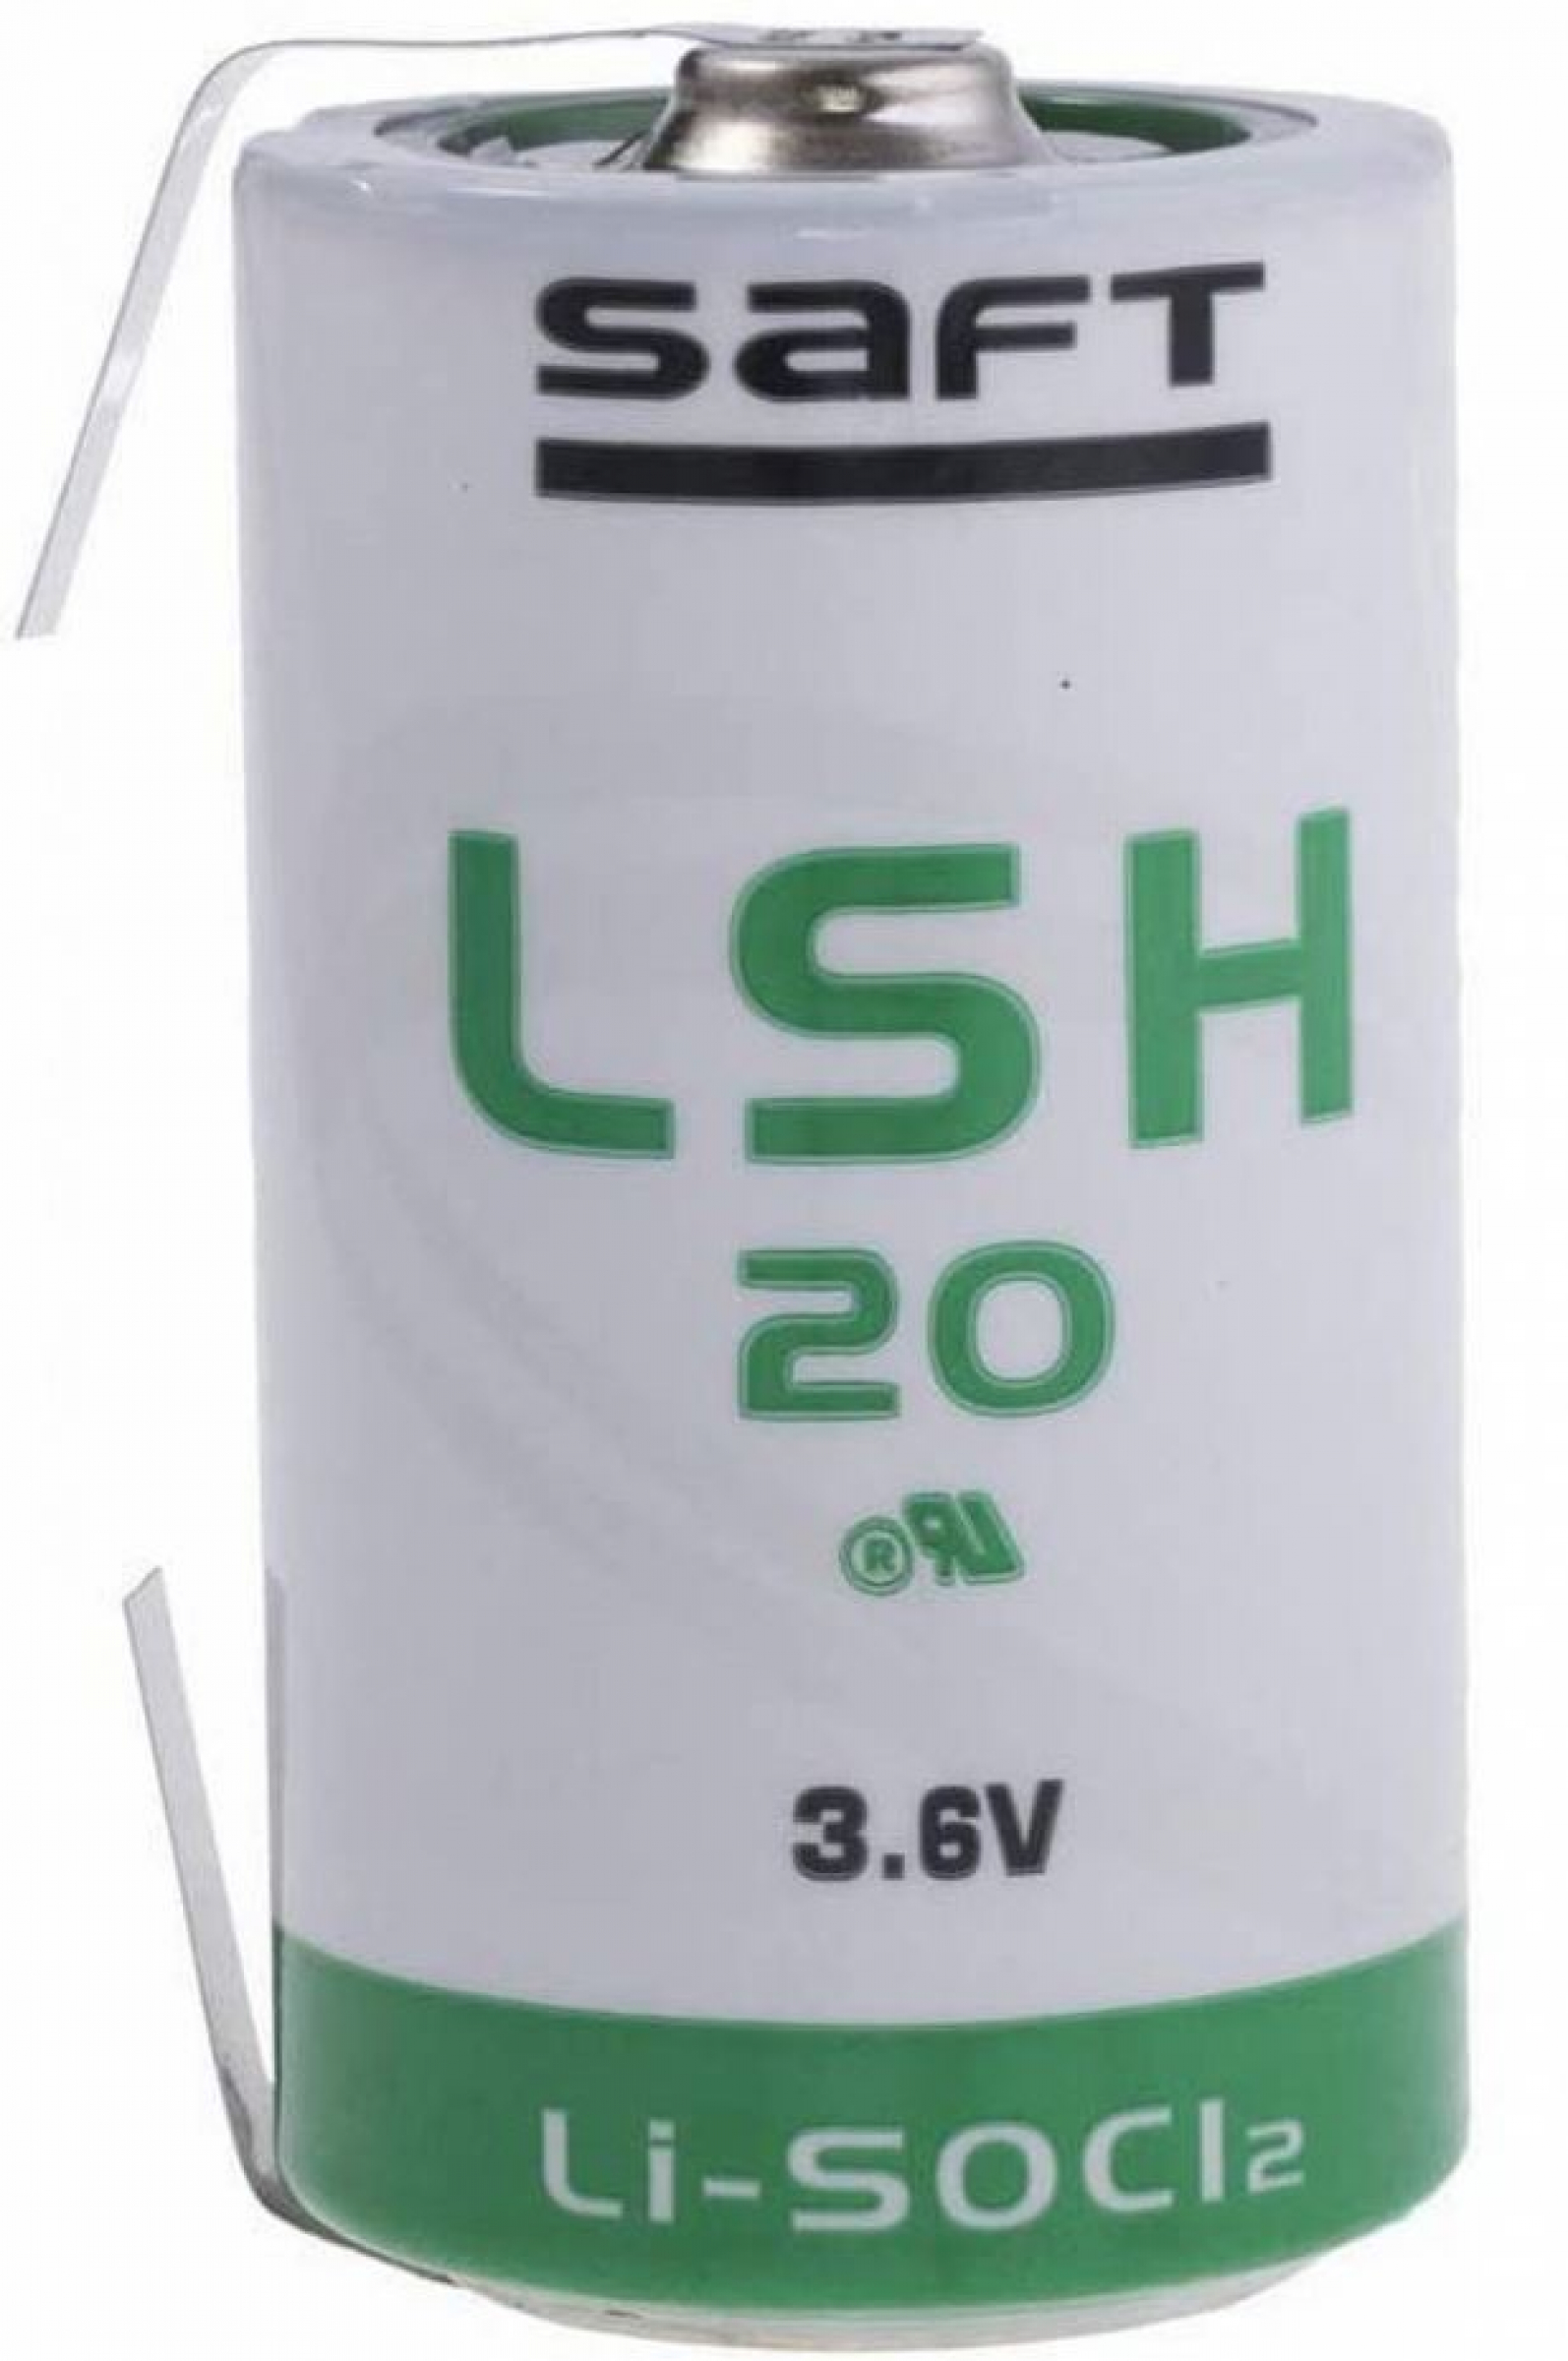 Saft LSH 20 D Lithium-Thionylchlorid 3,6V - with U-Tag